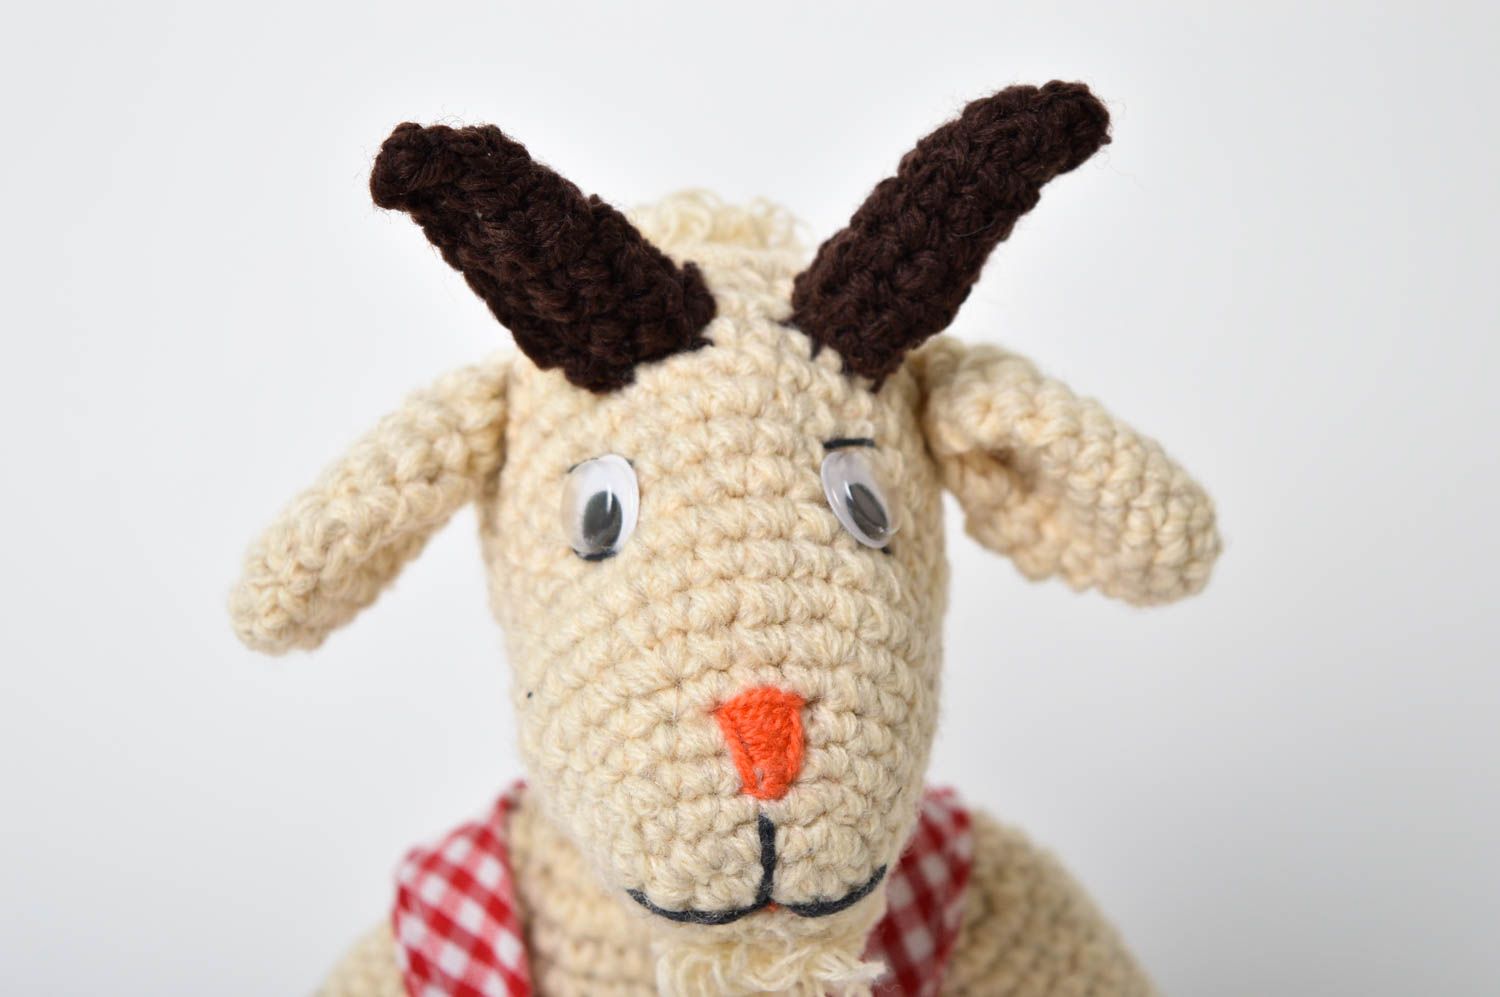 Handmade crocheted toy for babies nursery decor soft toys for children photo 3